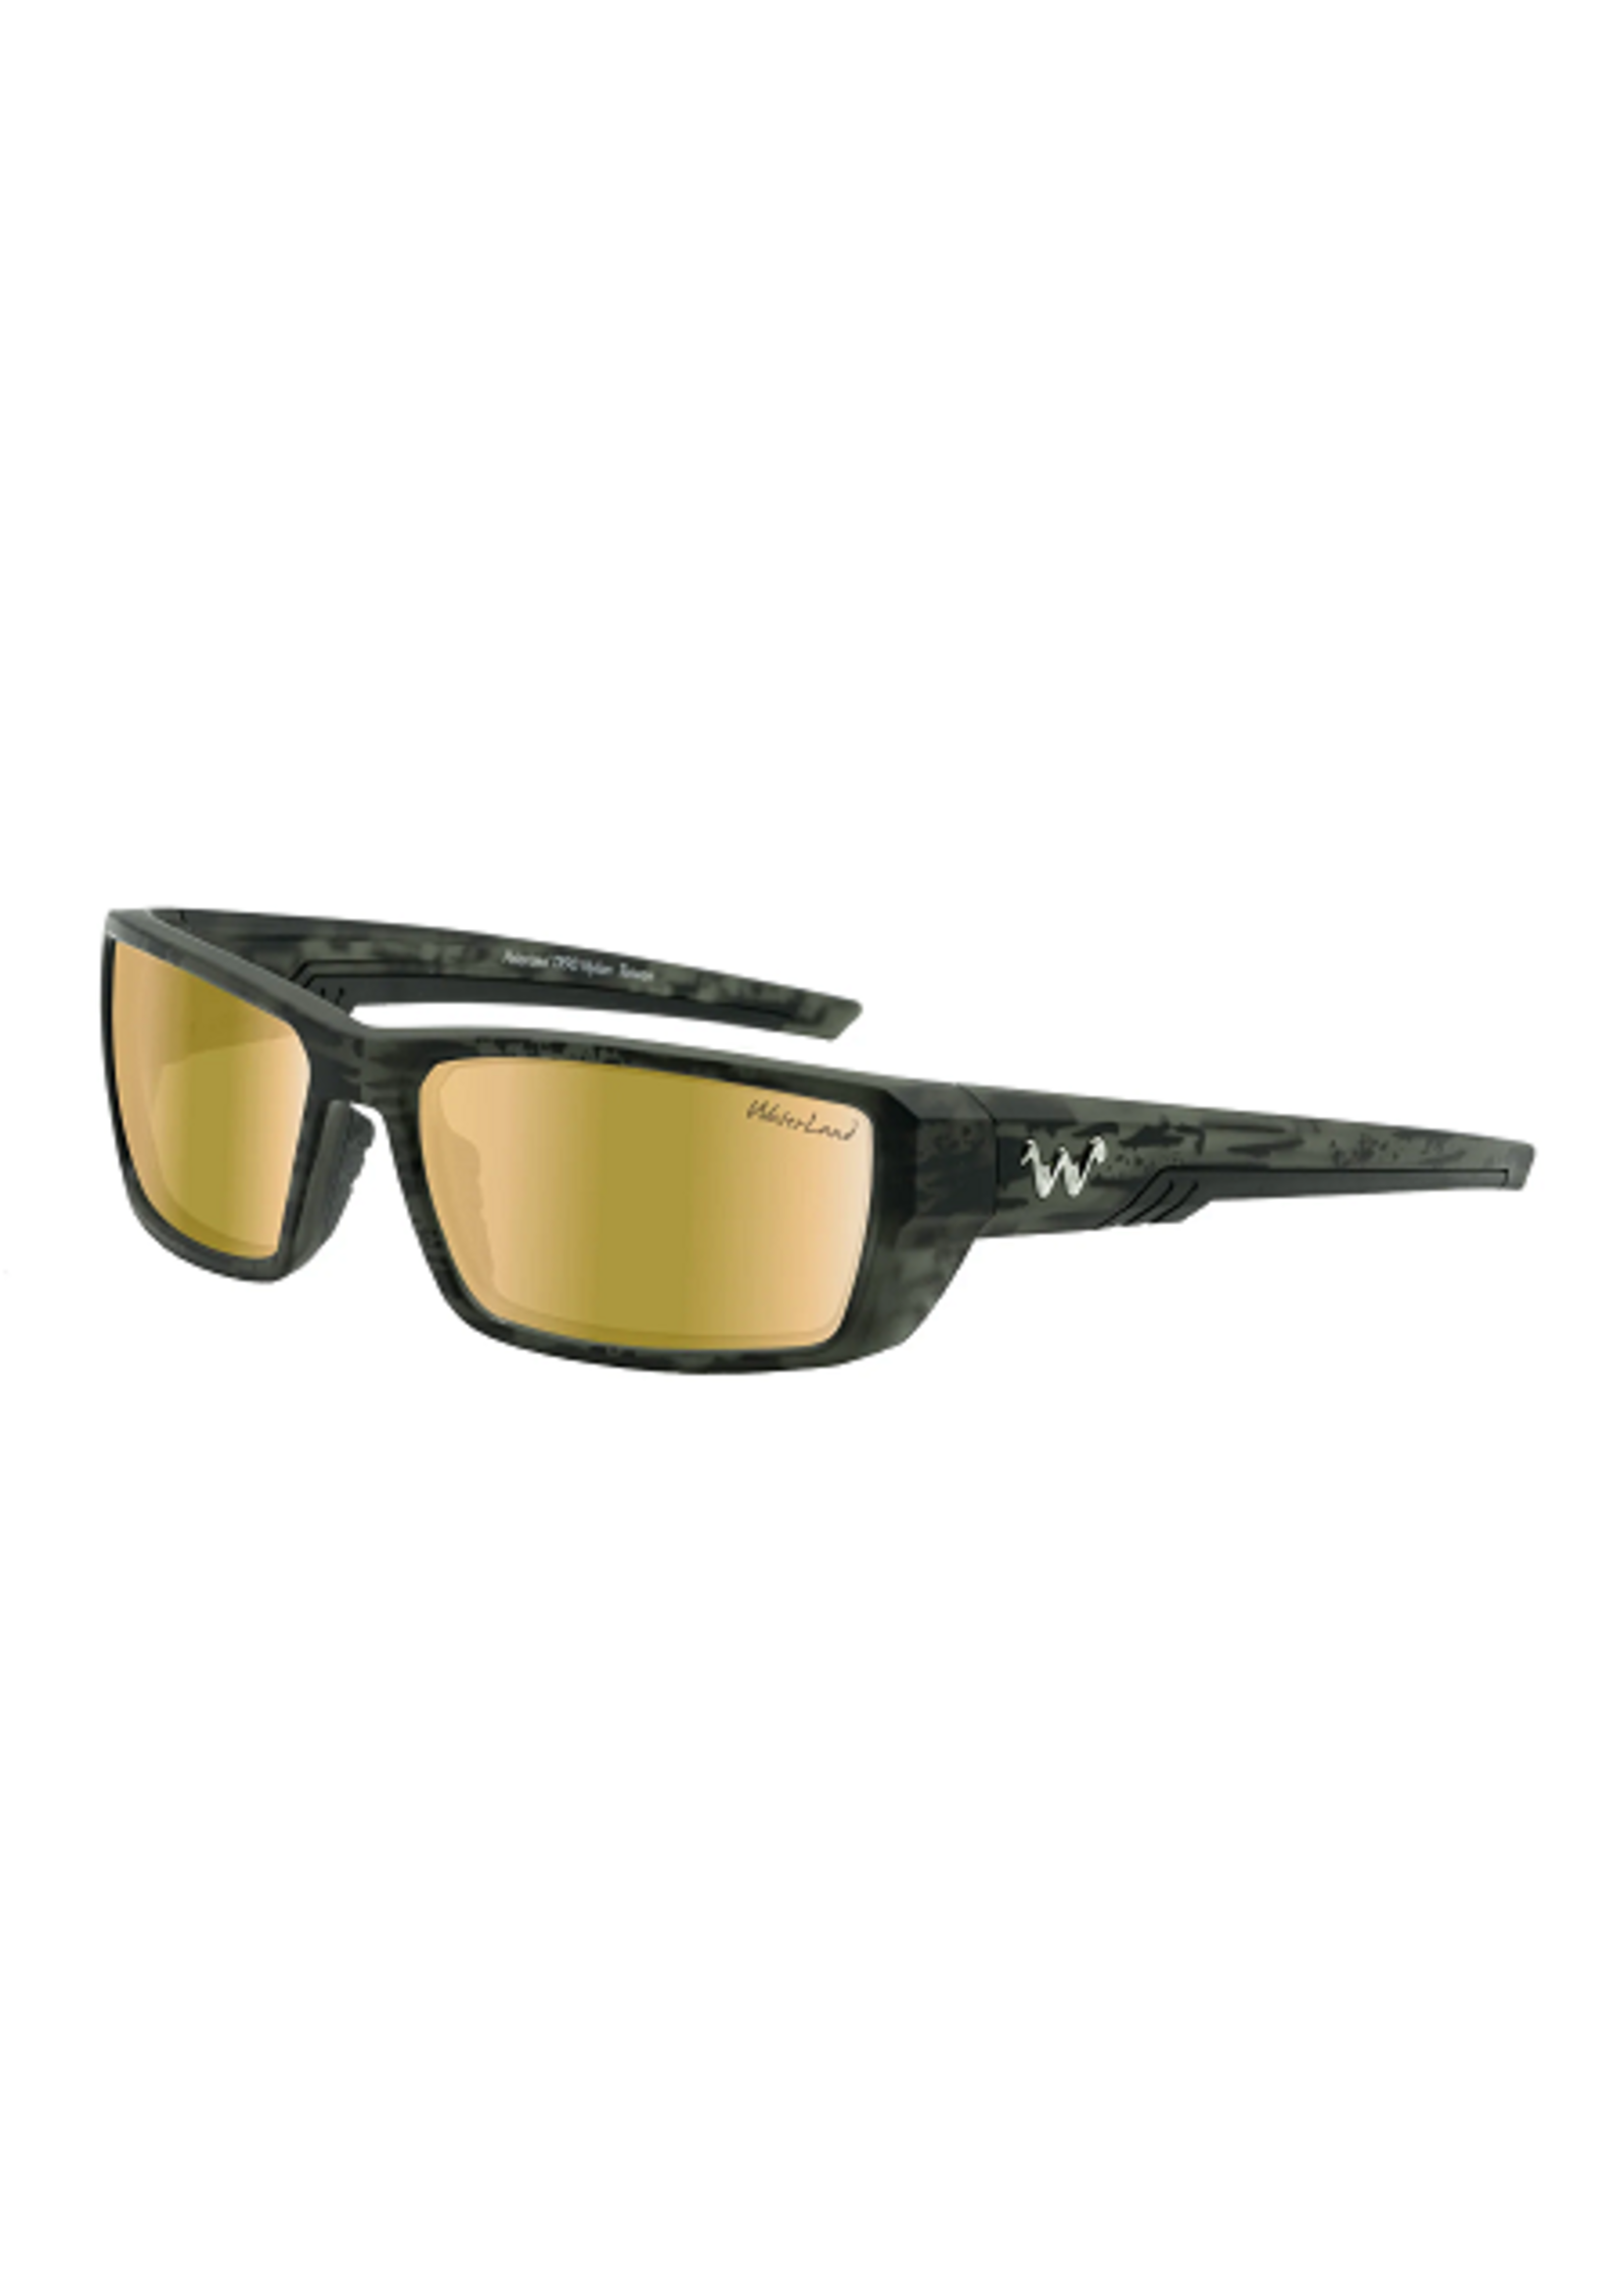 WaterLand Co, LLC. WaterLand Ashor Series Polarized Sunglasses